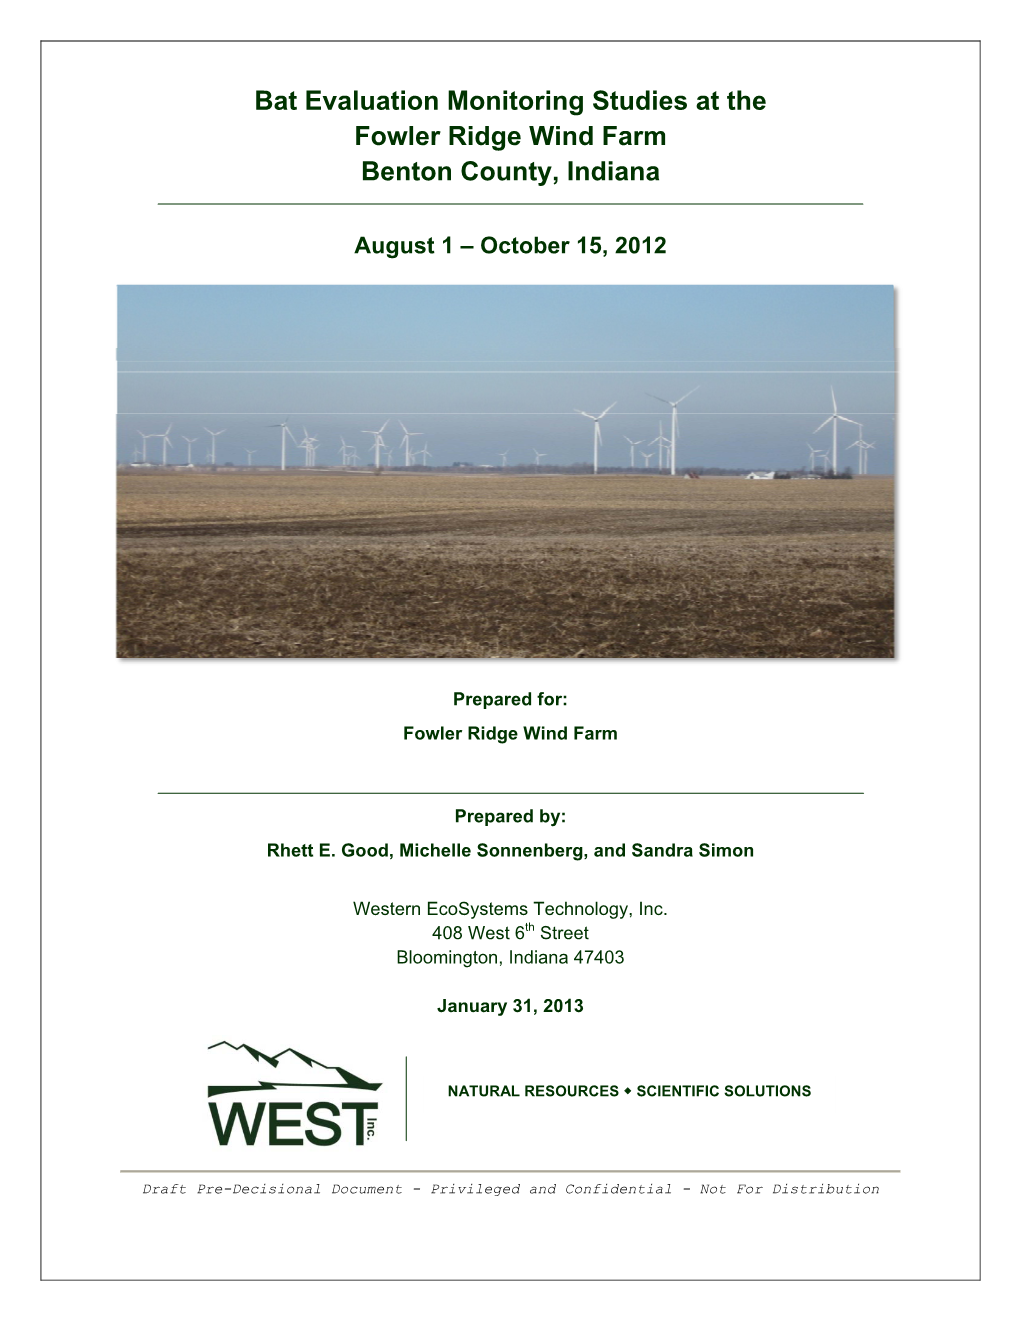 Bat Evaluation Monitoring Studies at the Fowler Ridge Wind Farm Benton County, Indiana